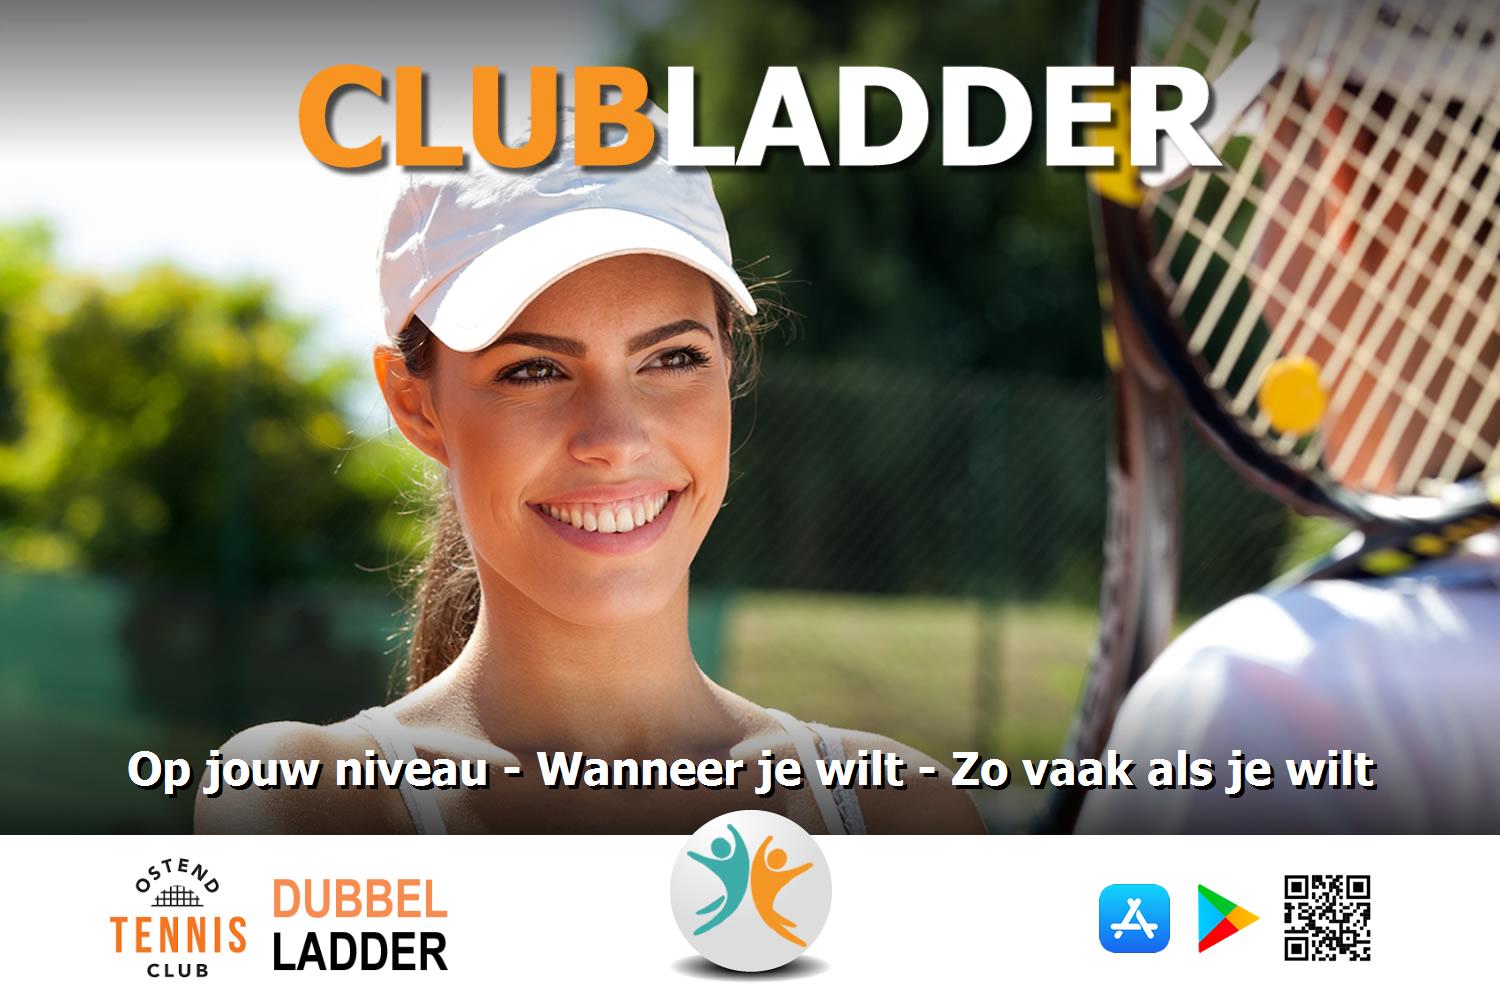 Ostend Tennis Club doubles ladder